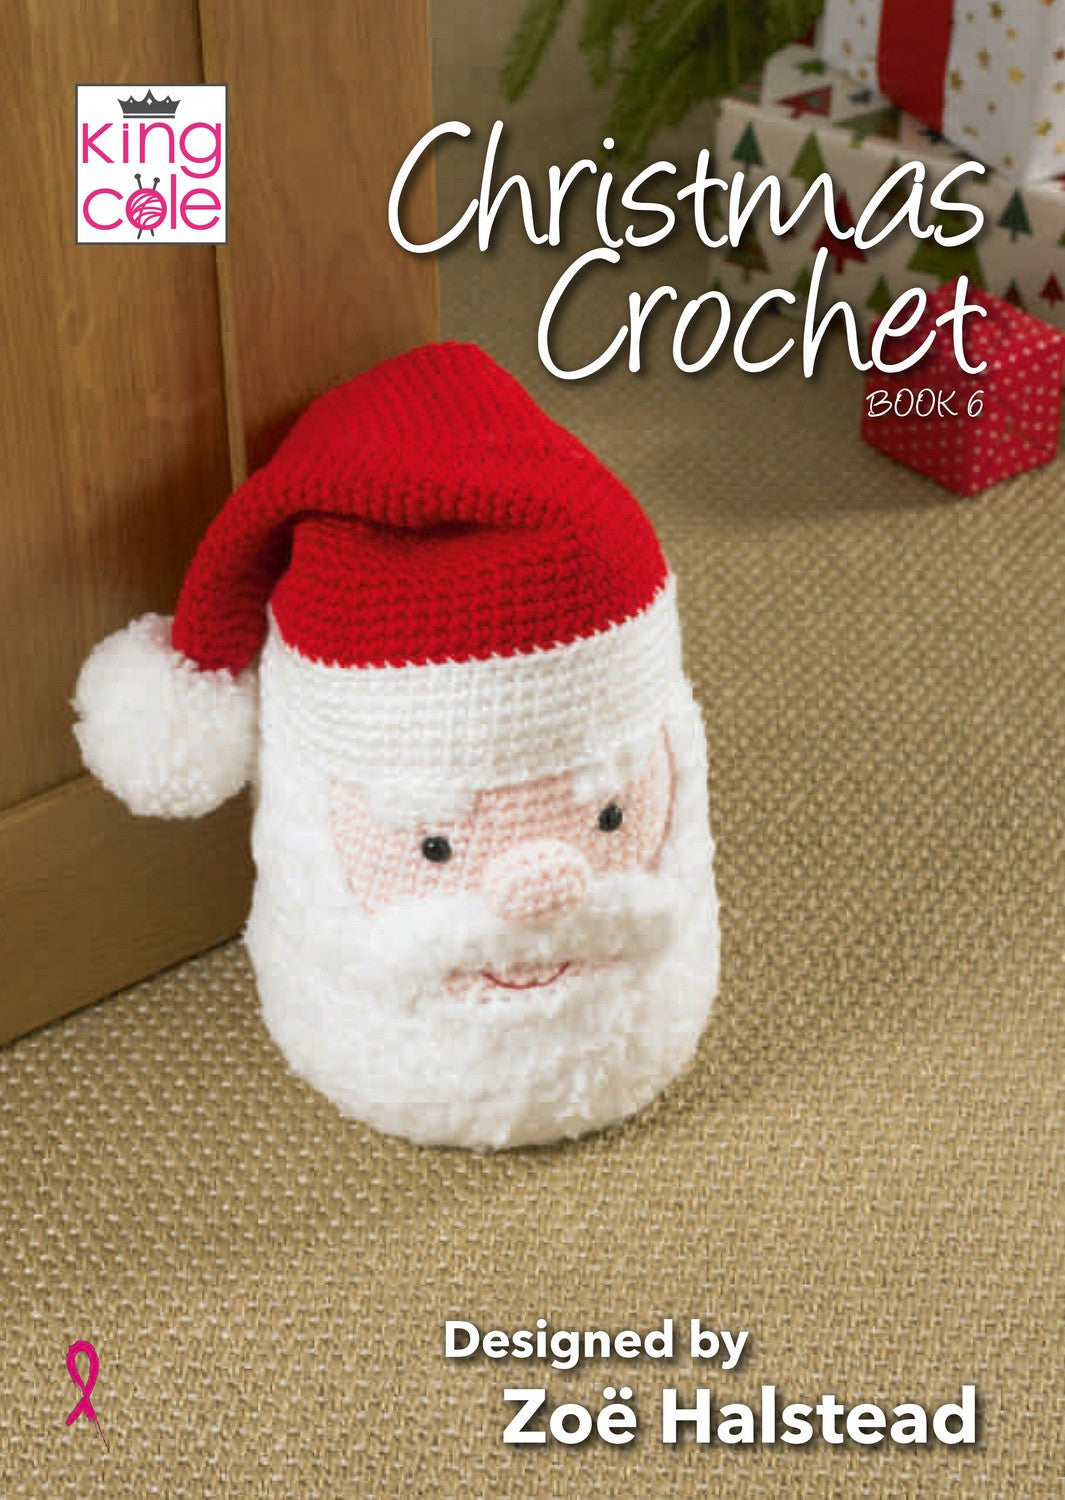 King Cole Christmas Crochet Books 6